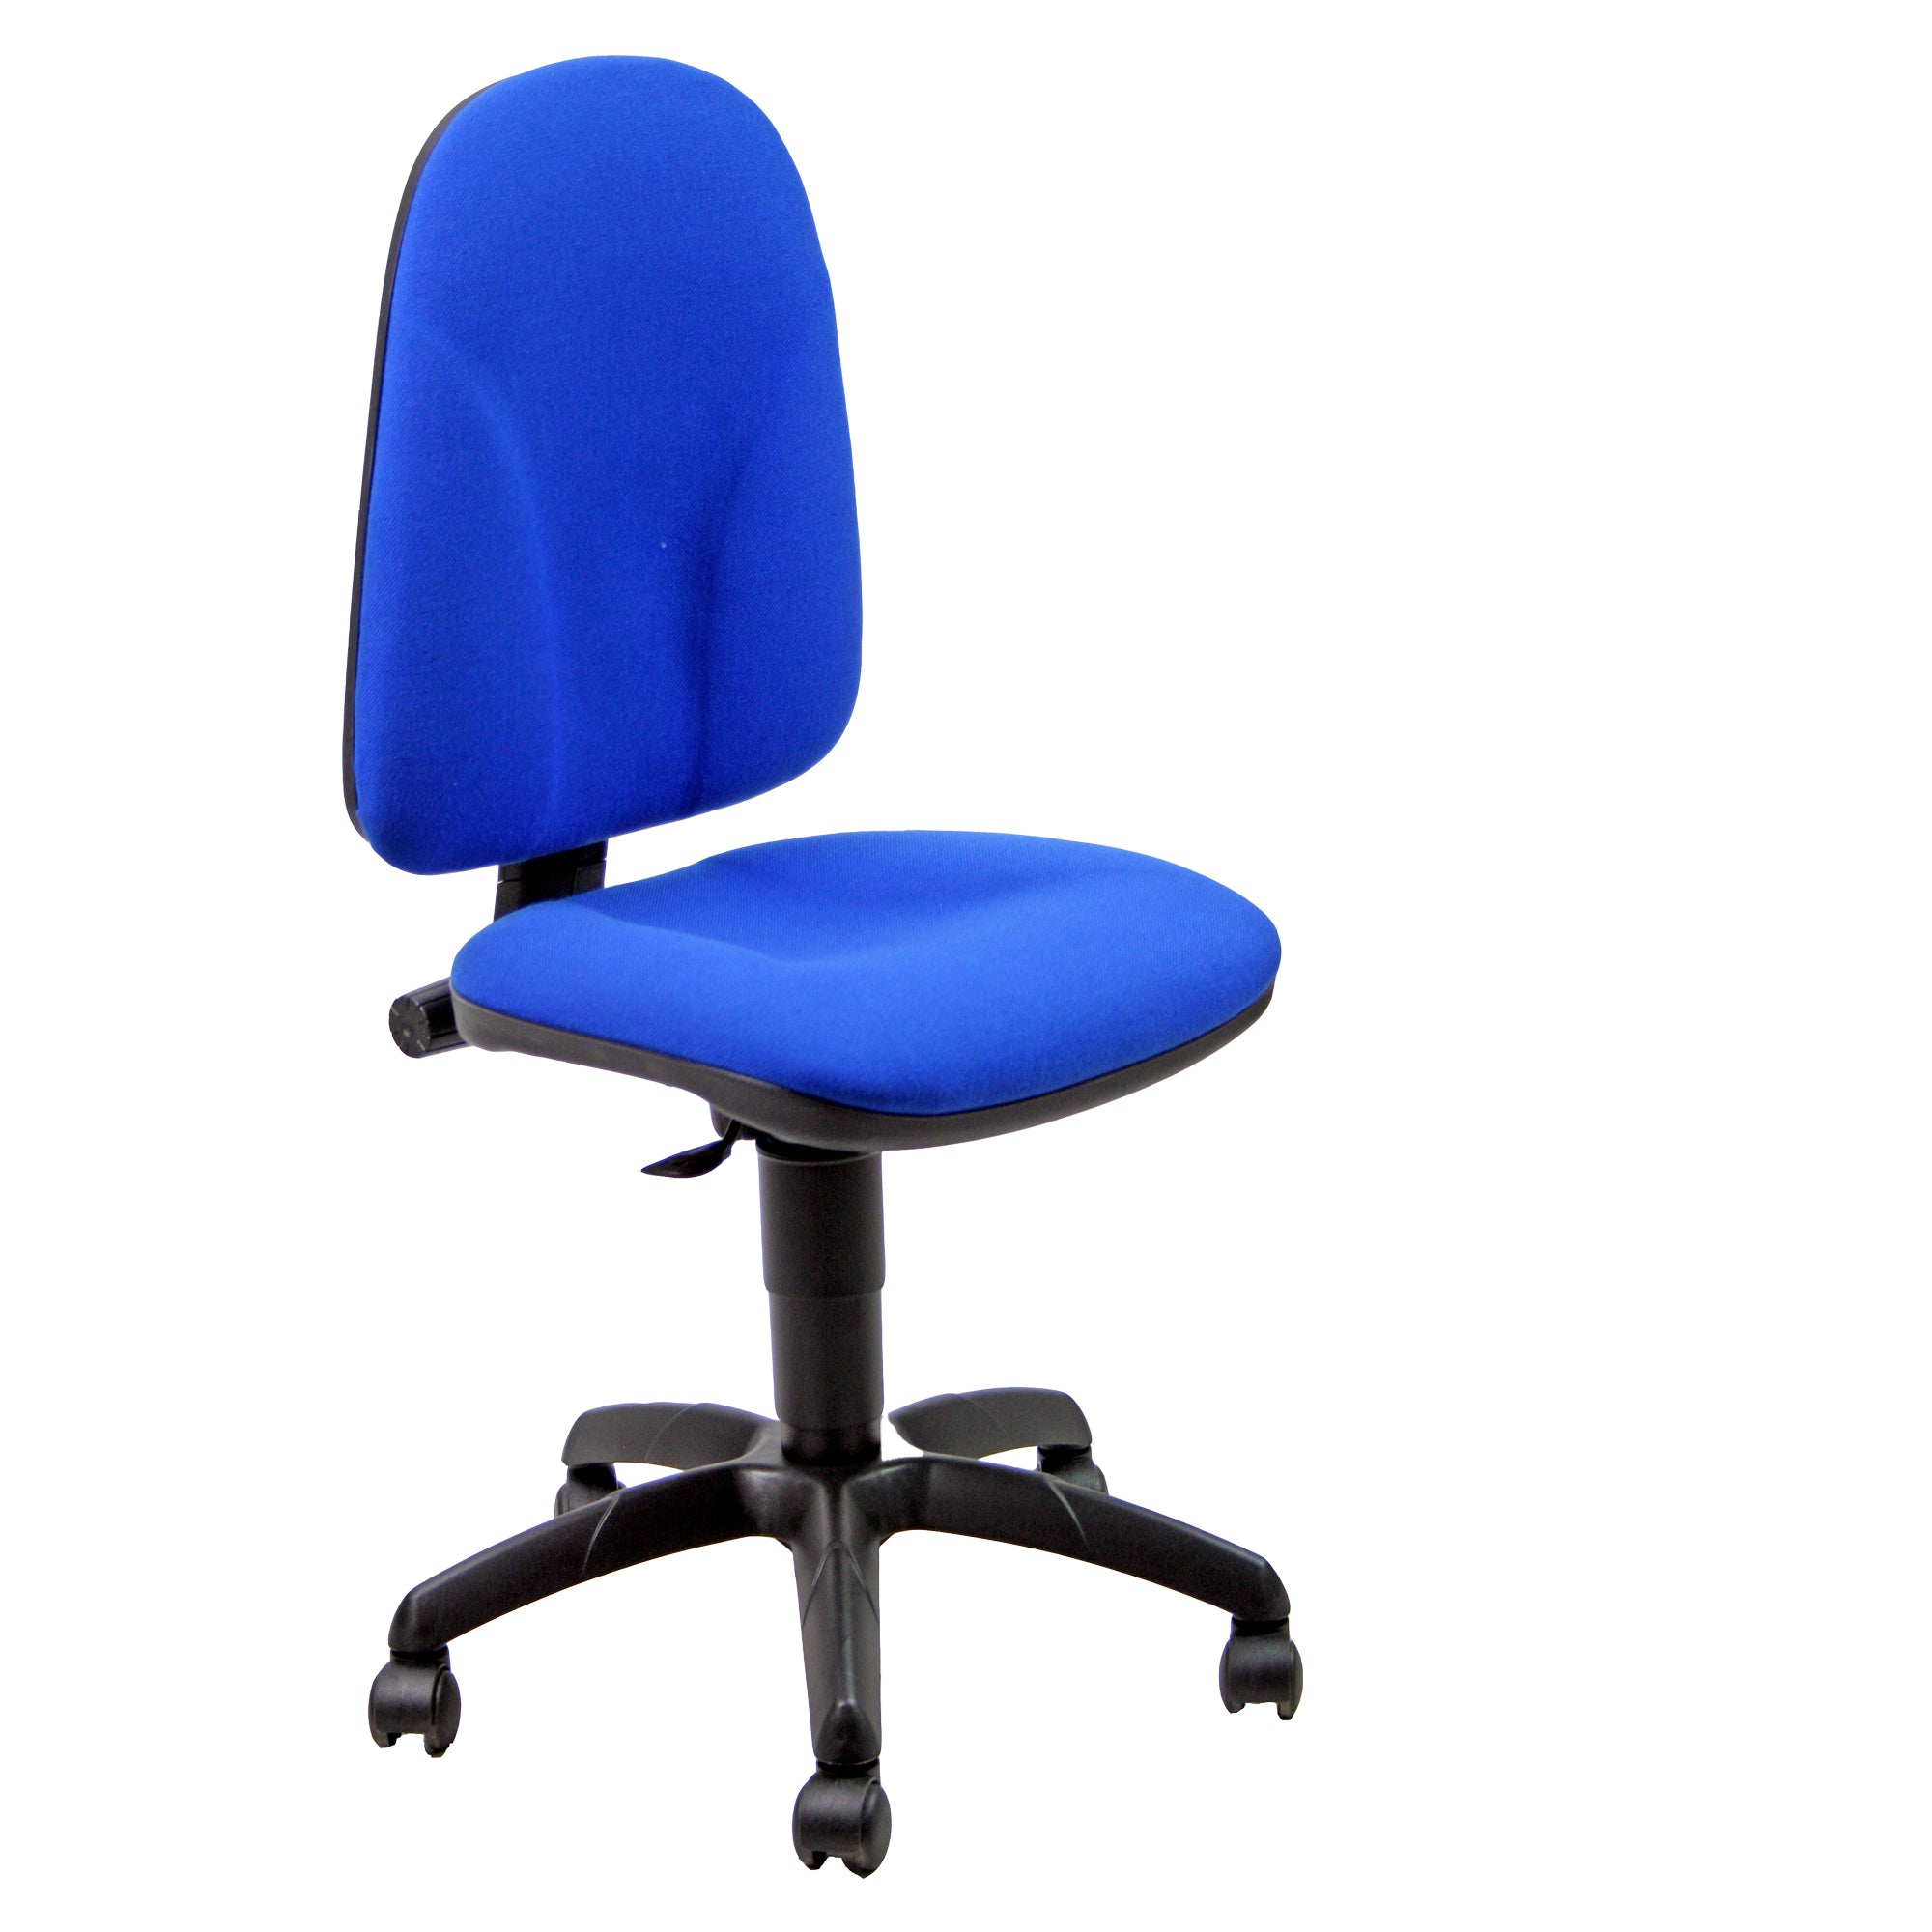 unisit-sedia-operativa-tmtmi-no-flame-blu-senza-braccioli